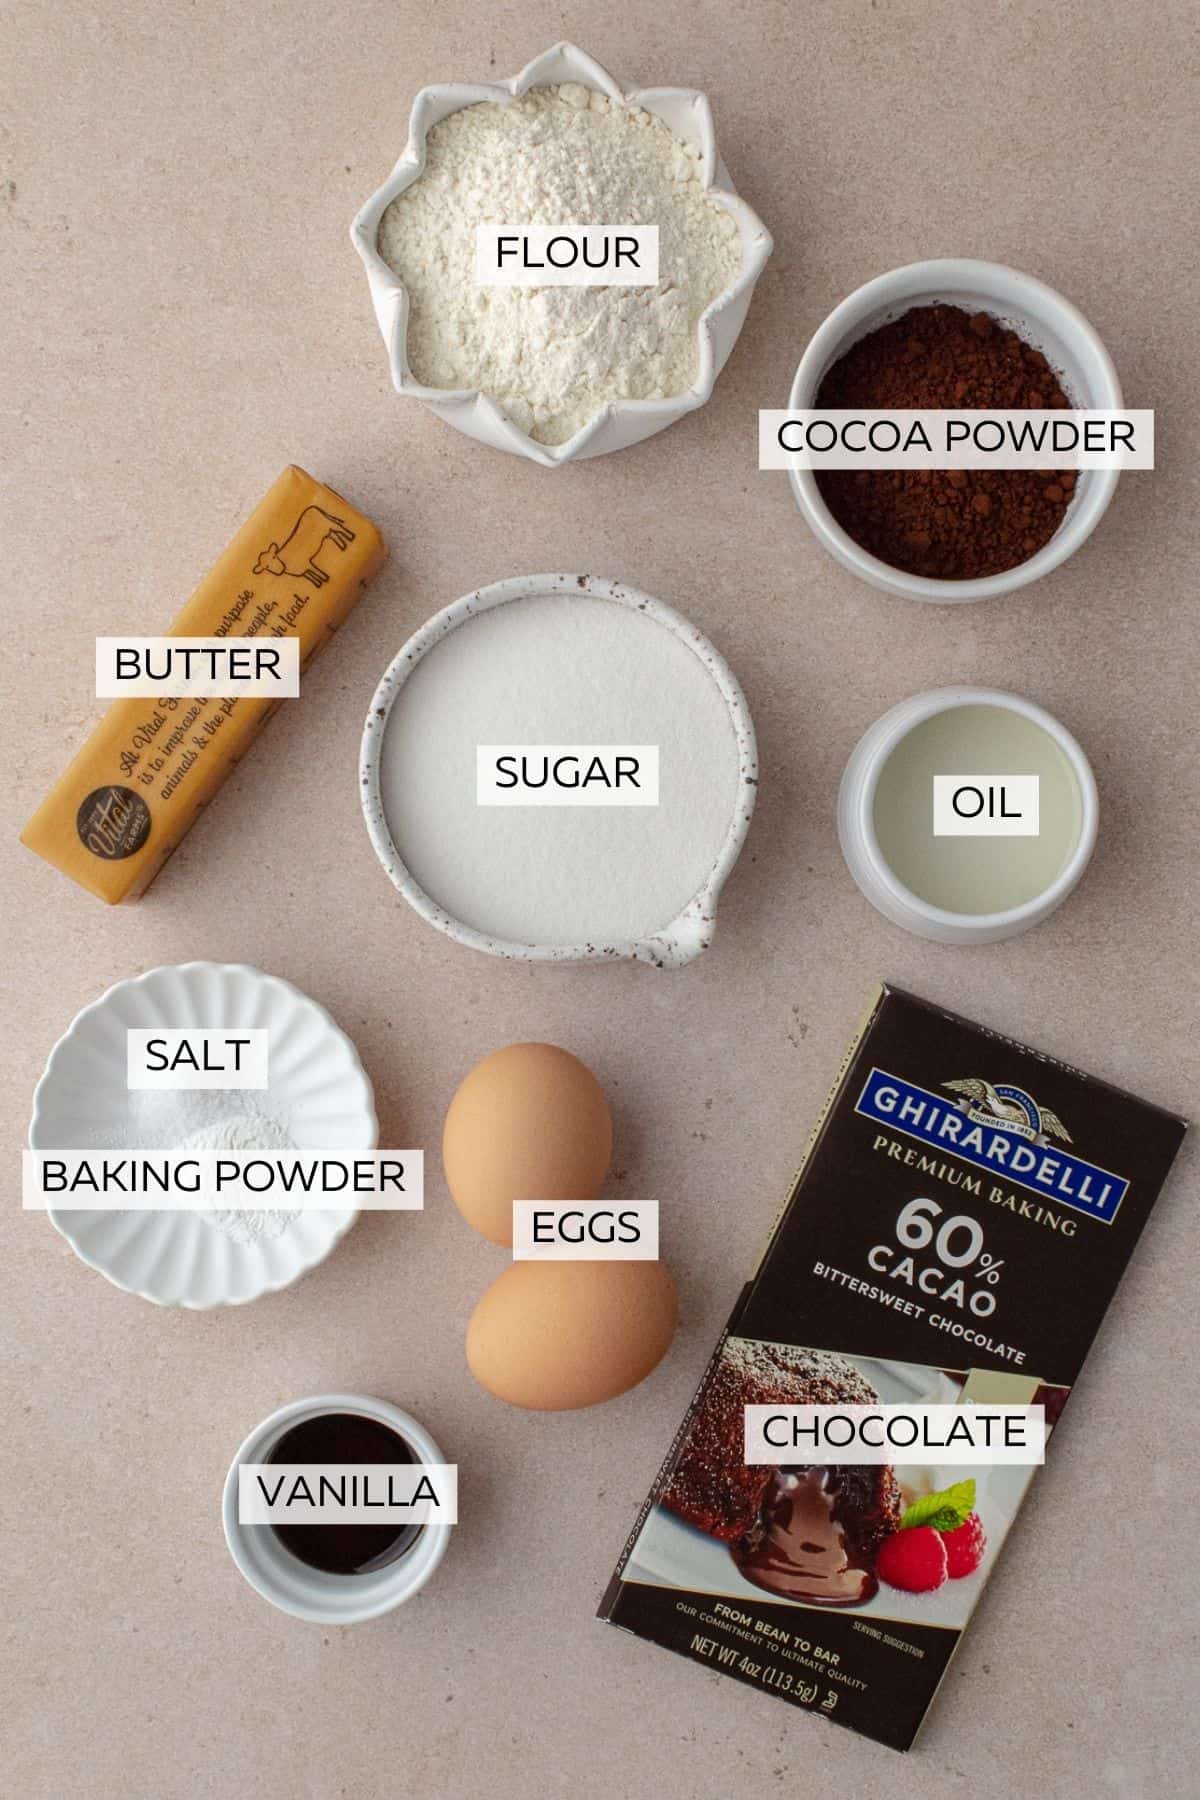 Chocolate madeleines ingredients.